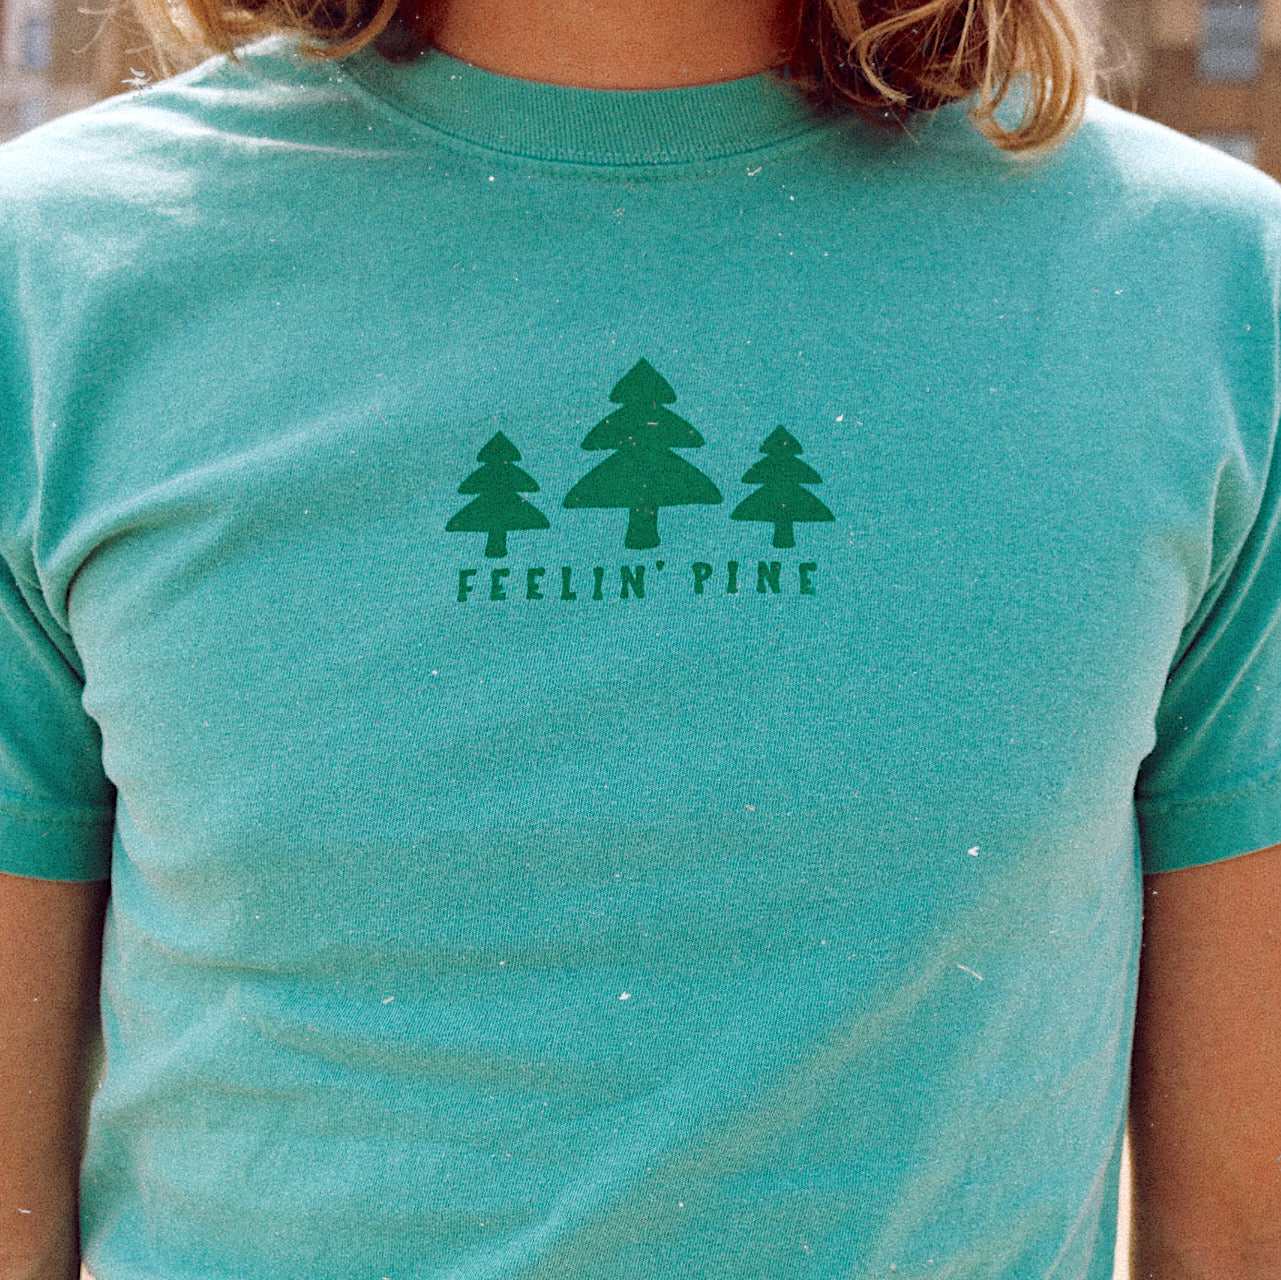 Feelin' Pine - Shirt